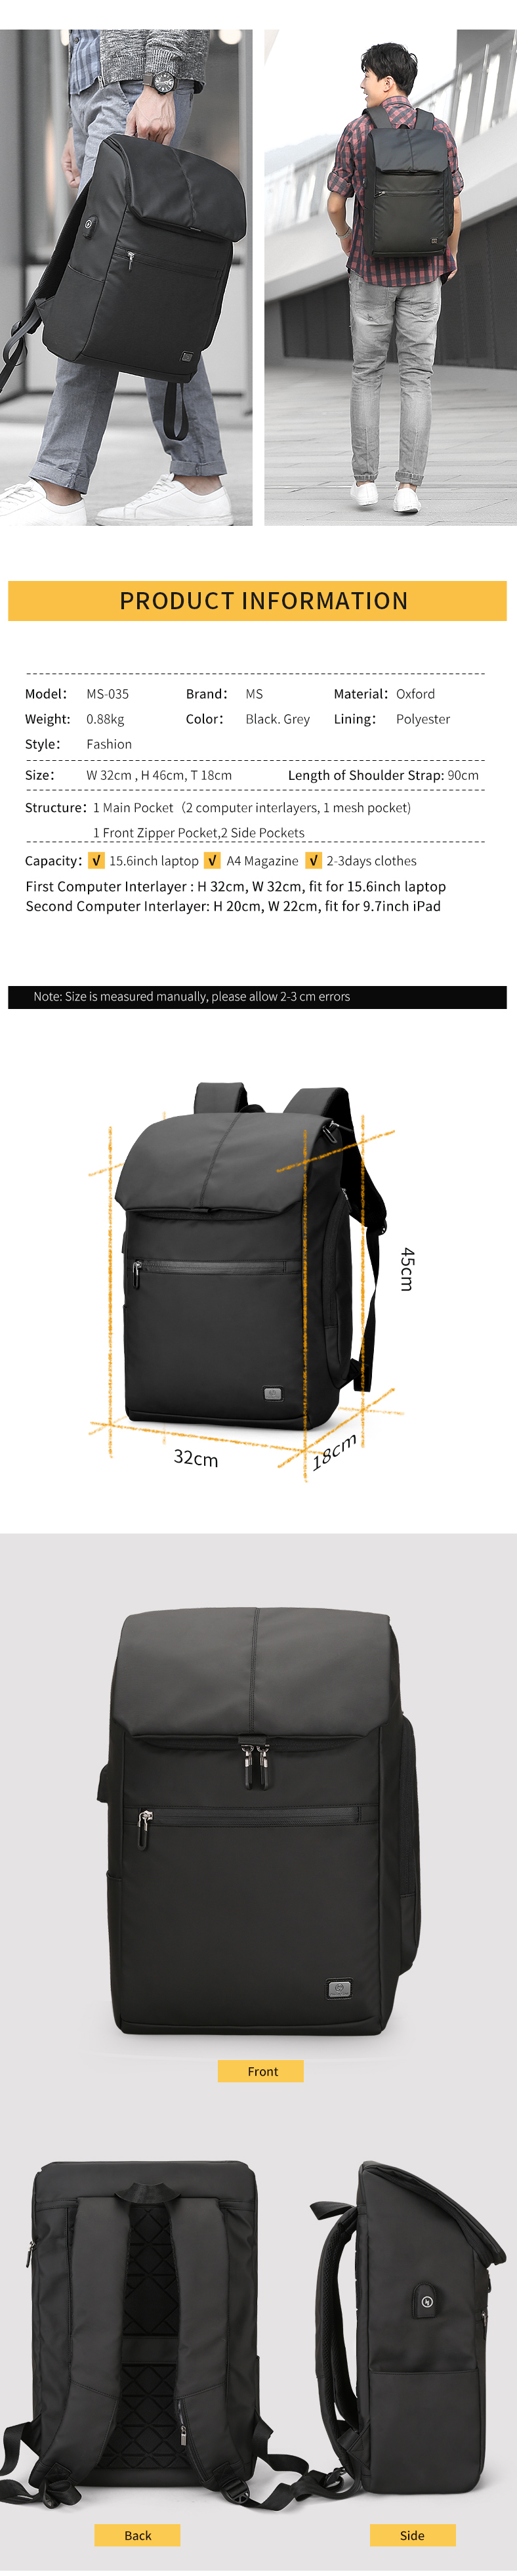 Mazzy-Star-MS035-Laptop-Backpack-Waterproof-Laptop-Bag-Large-Capacity-Travel-Bagpacks-Mens-Shoulder--1544339